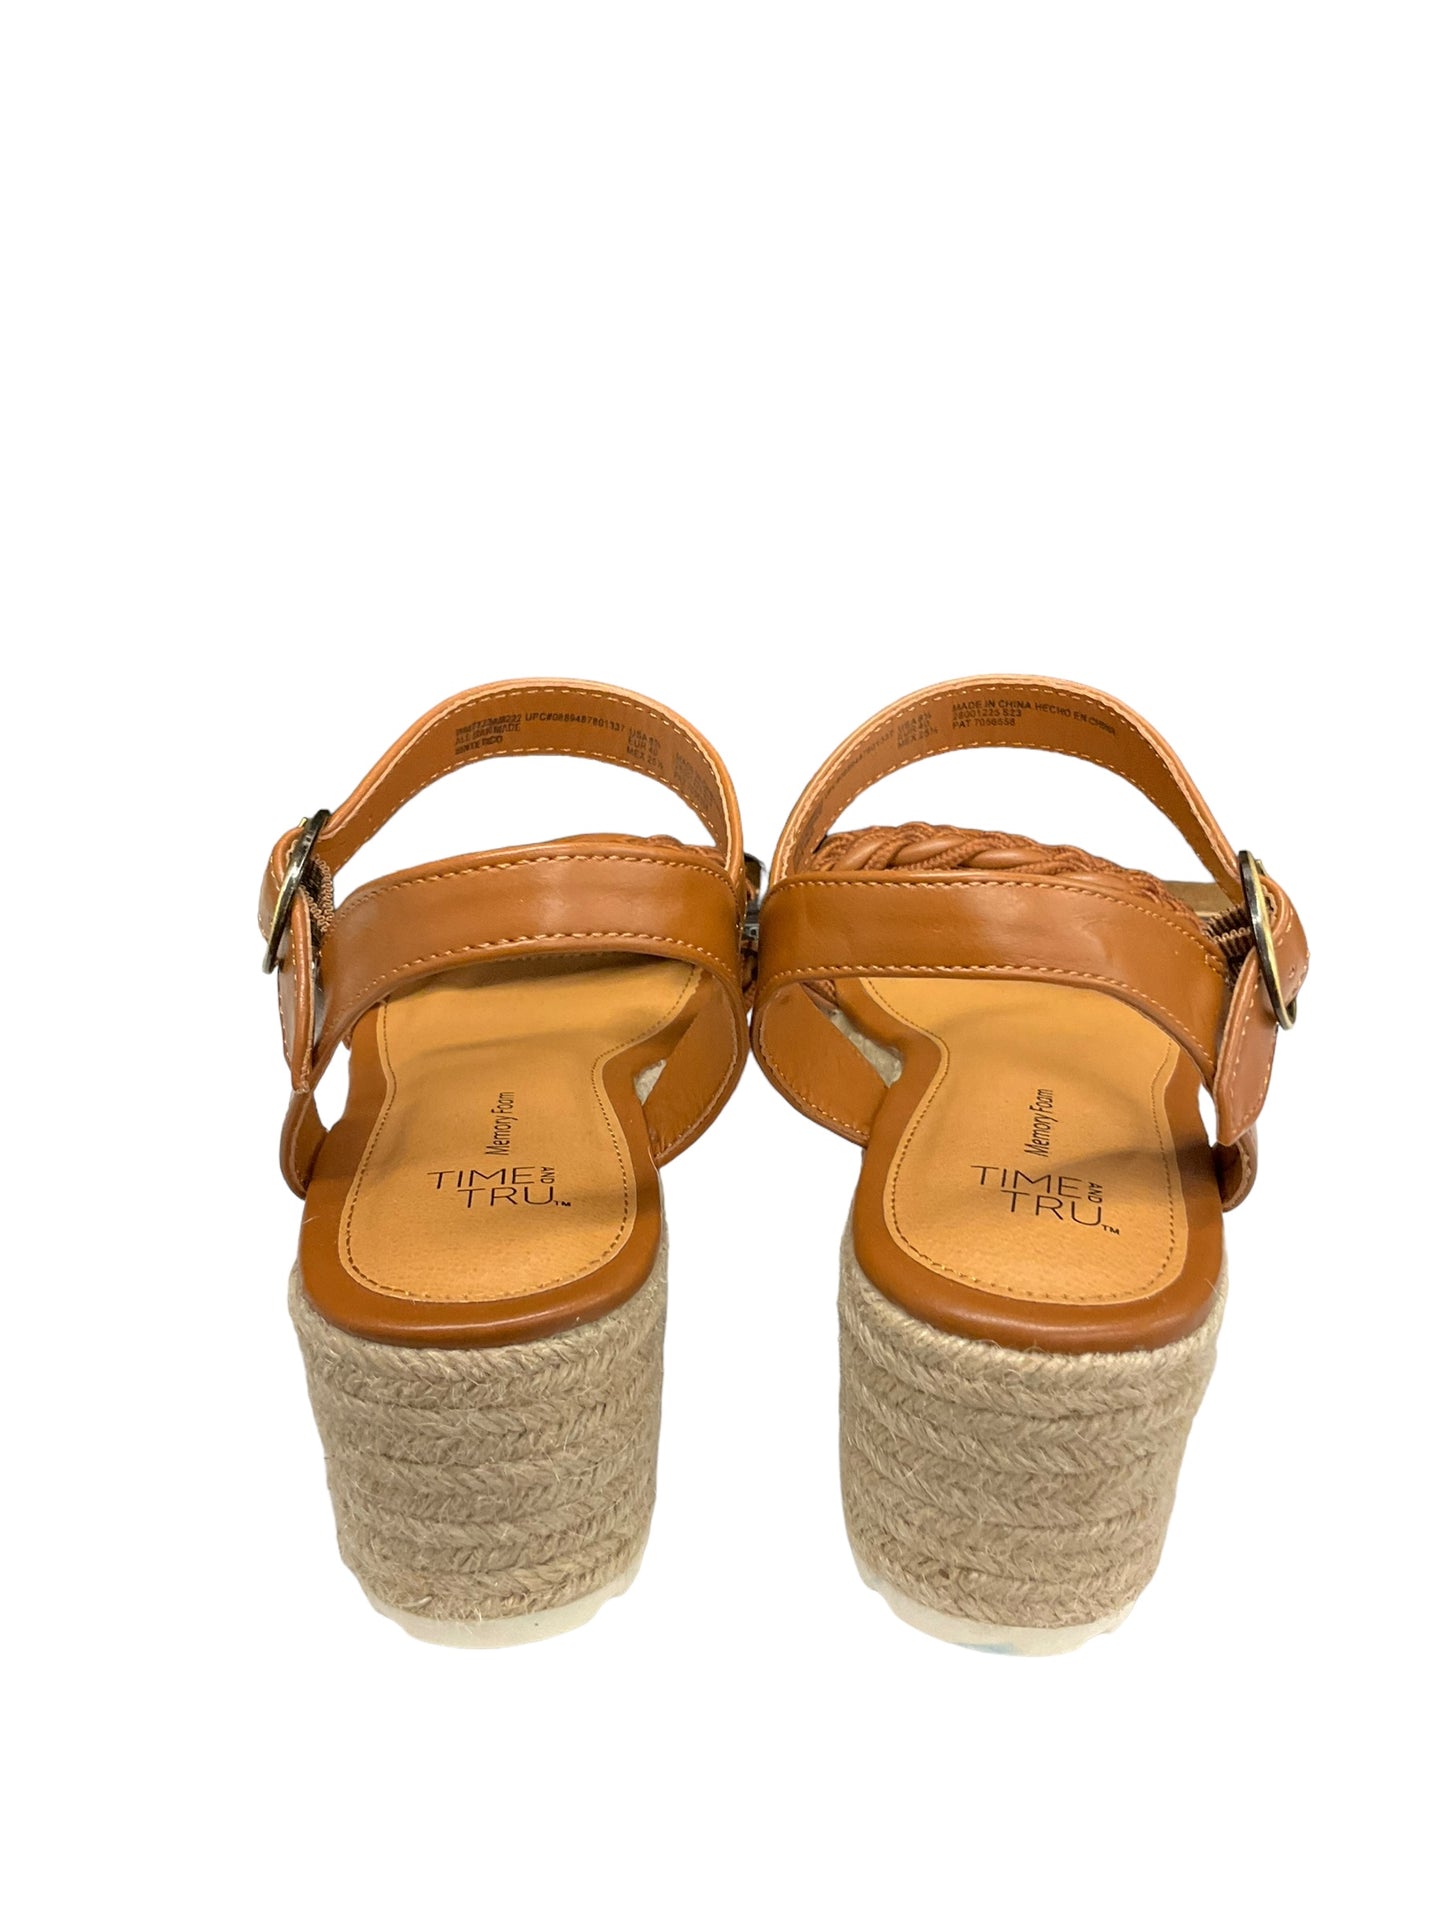 Tan Sandals Heels Platform Time And Tru, Size 8.5